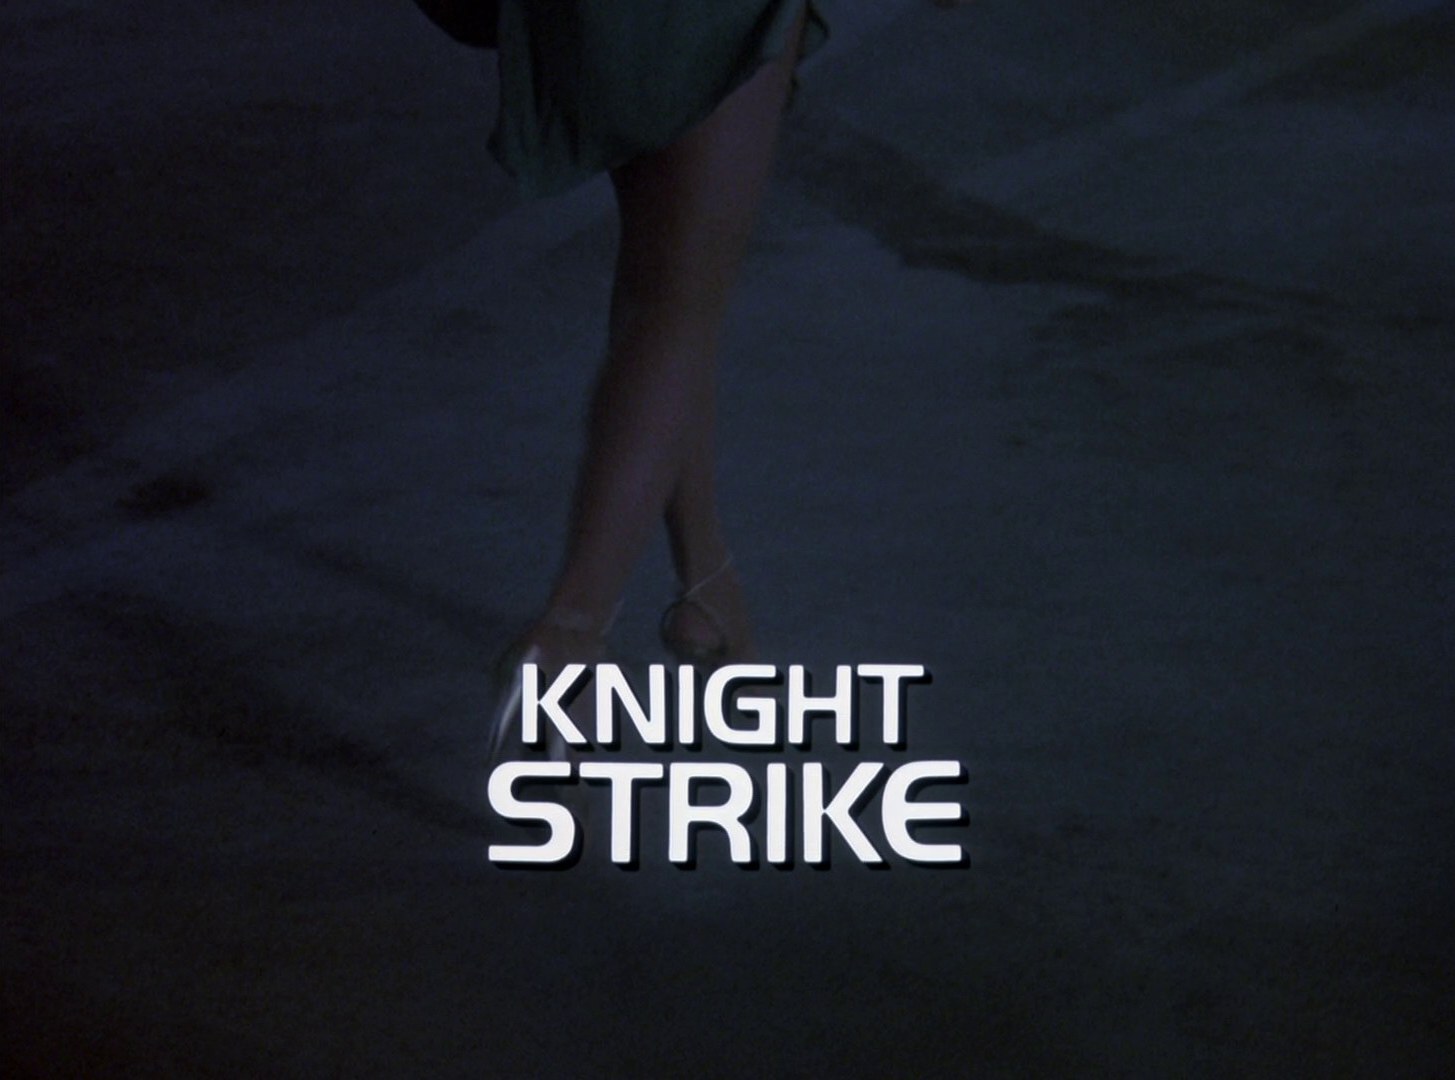 Knight Rider Season 3 - Episode 62 - Knight Strike - Photo 1